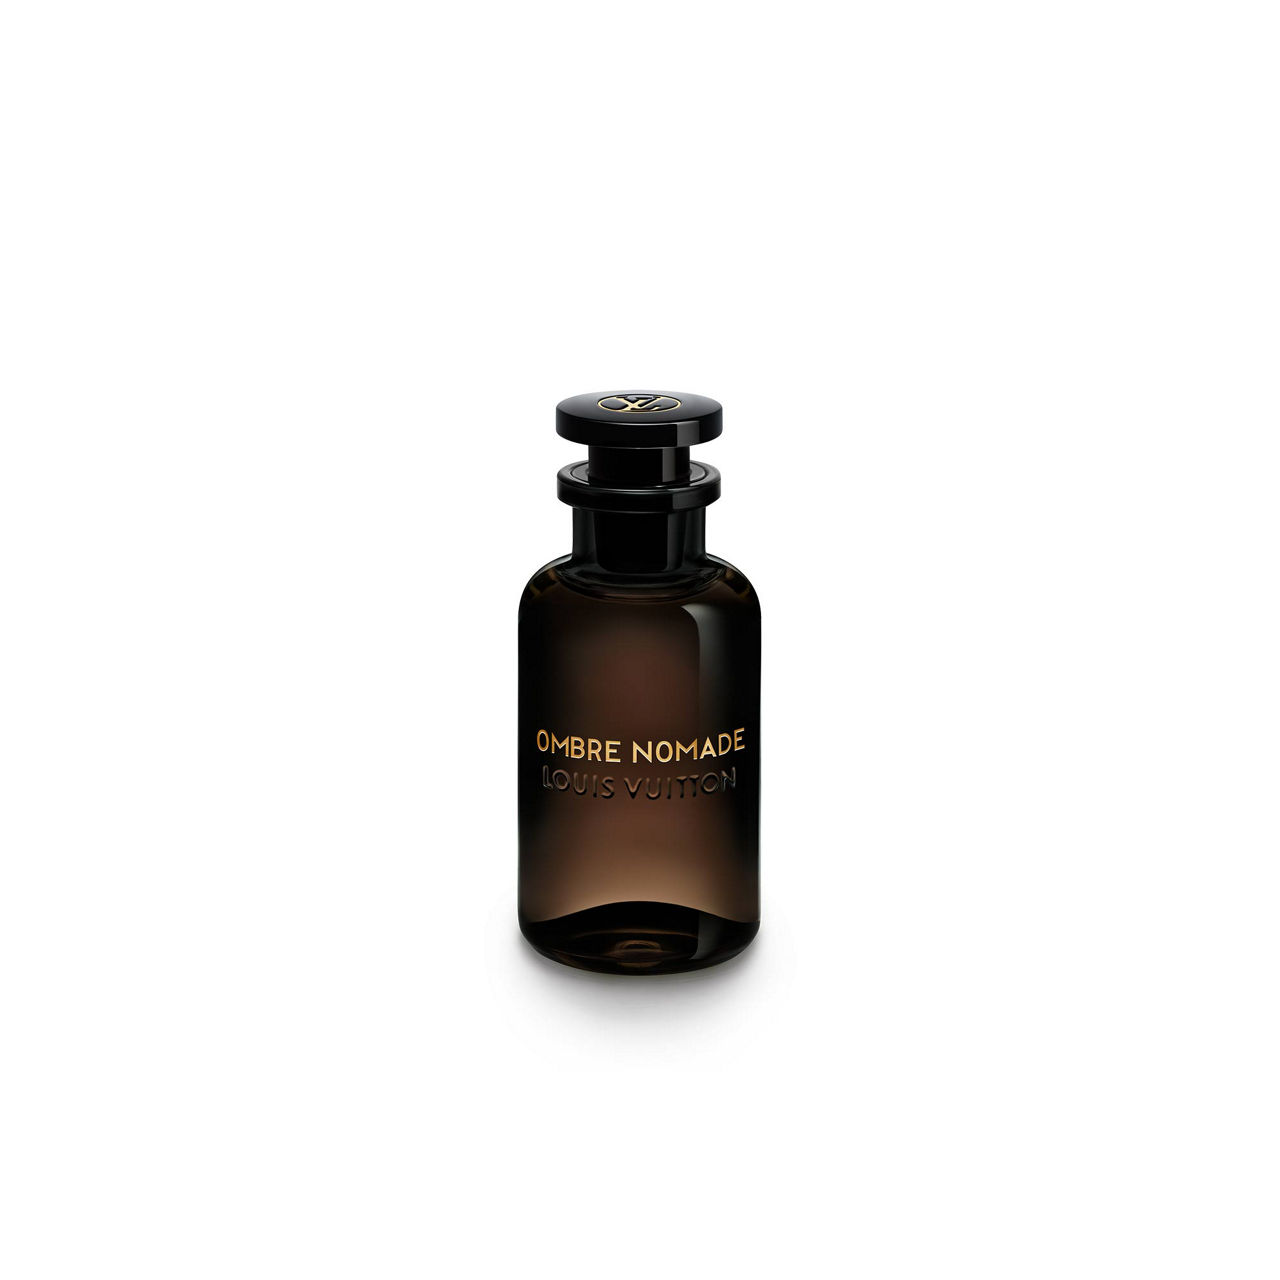 Louis Vuitton launches Les Parfums Ombre Nomade - The Glass Magazine